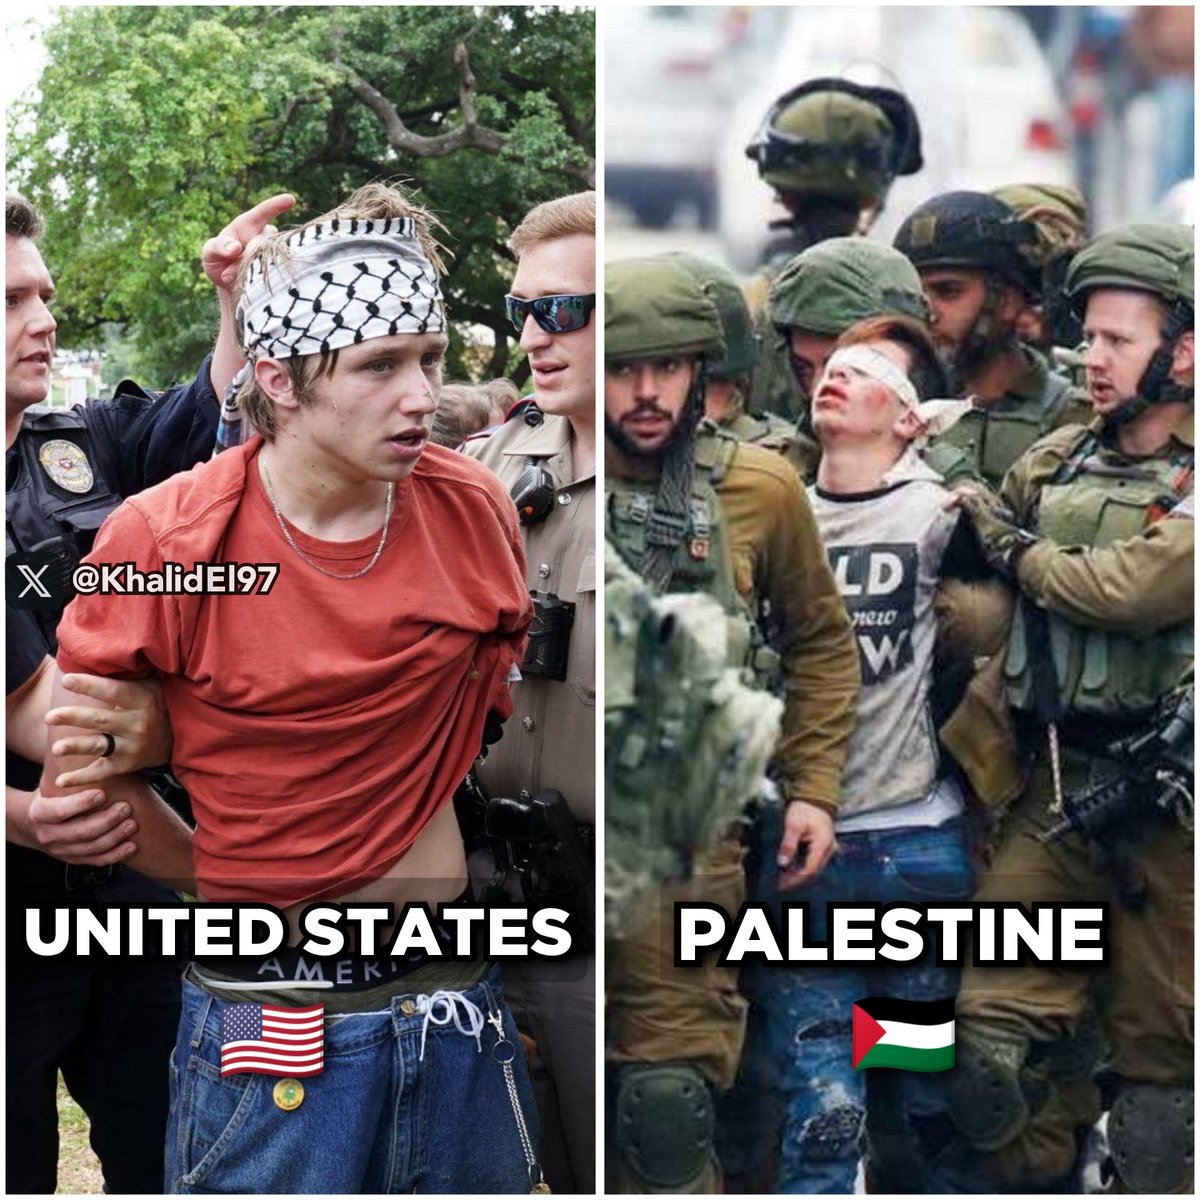 @prem_thakker similar policies! zionist don't just occupy Palestinian land
#FreePalestine